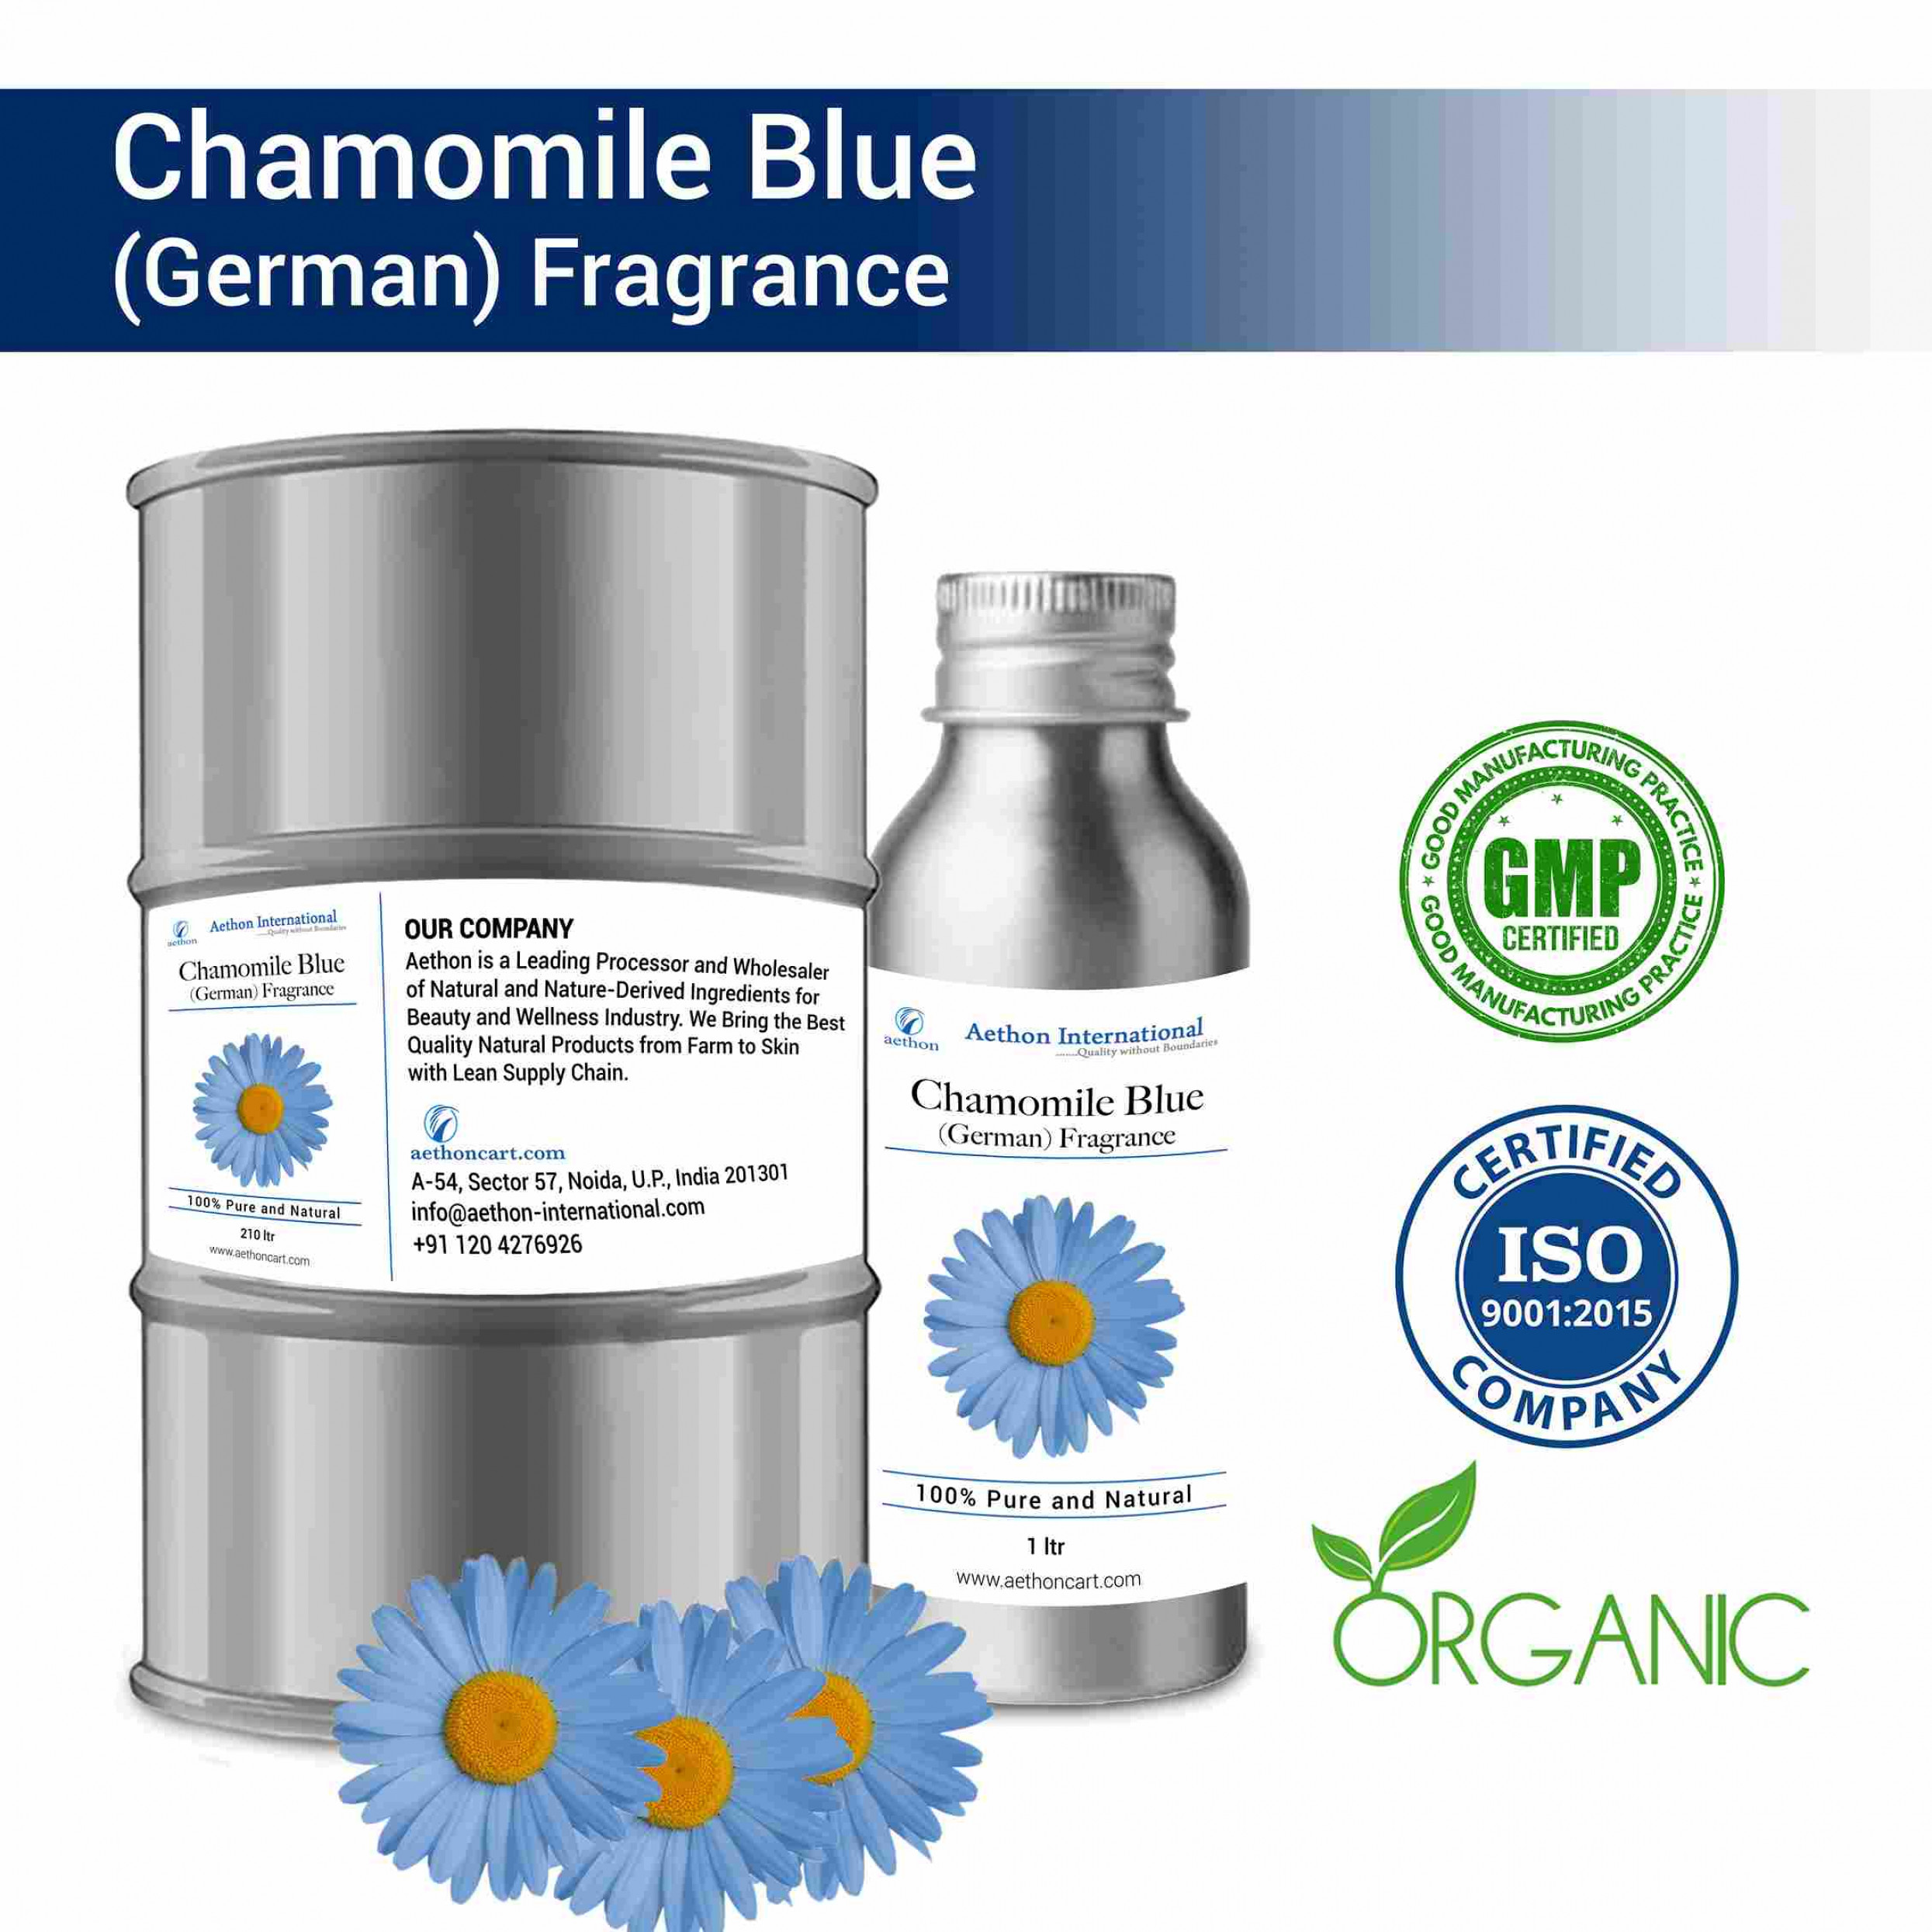 Chamomile Blue (German) Fragrance